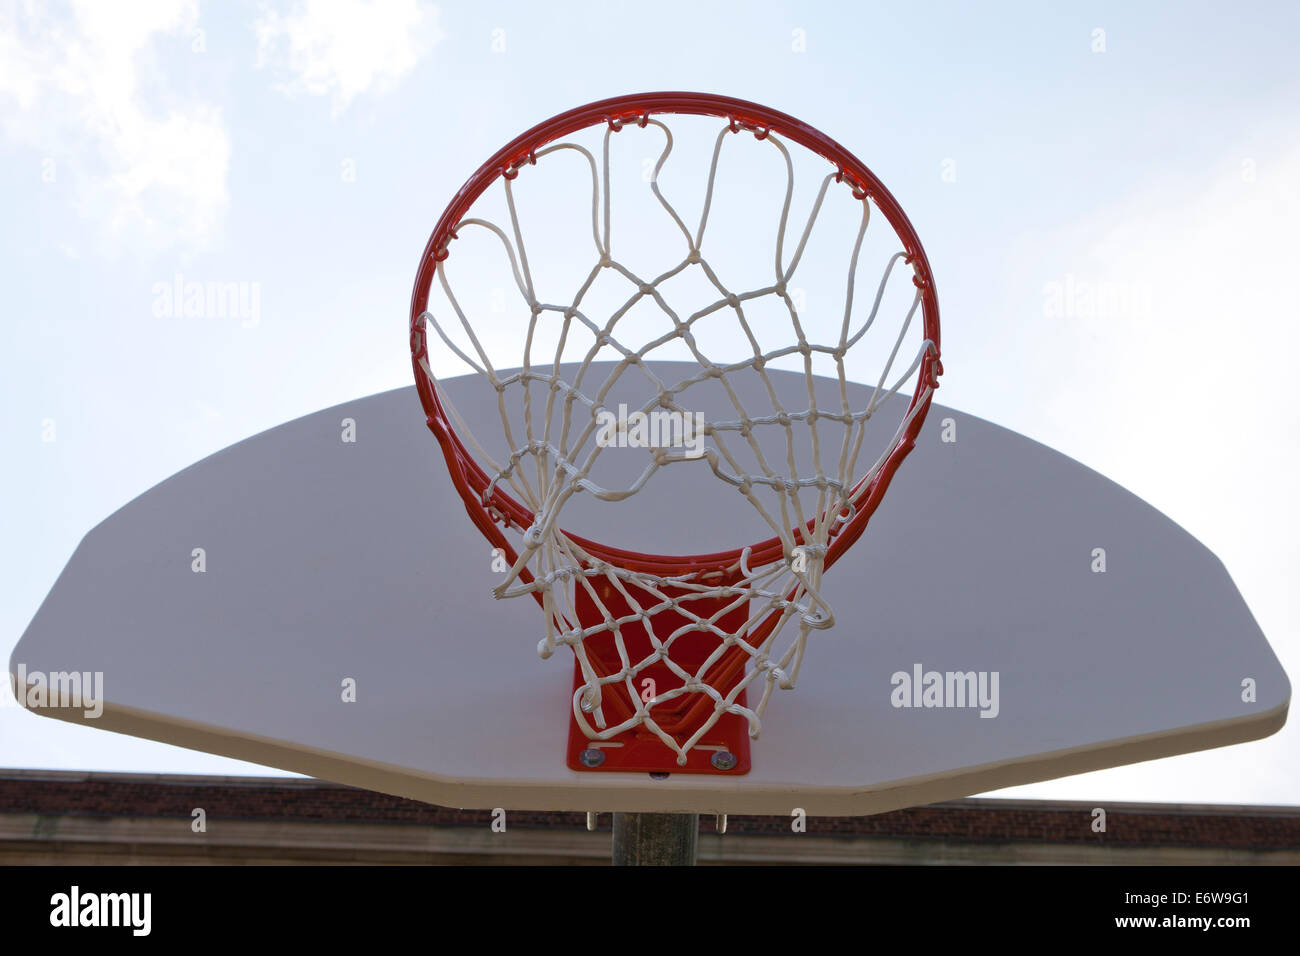 Basketball hoop from below Stock Photo